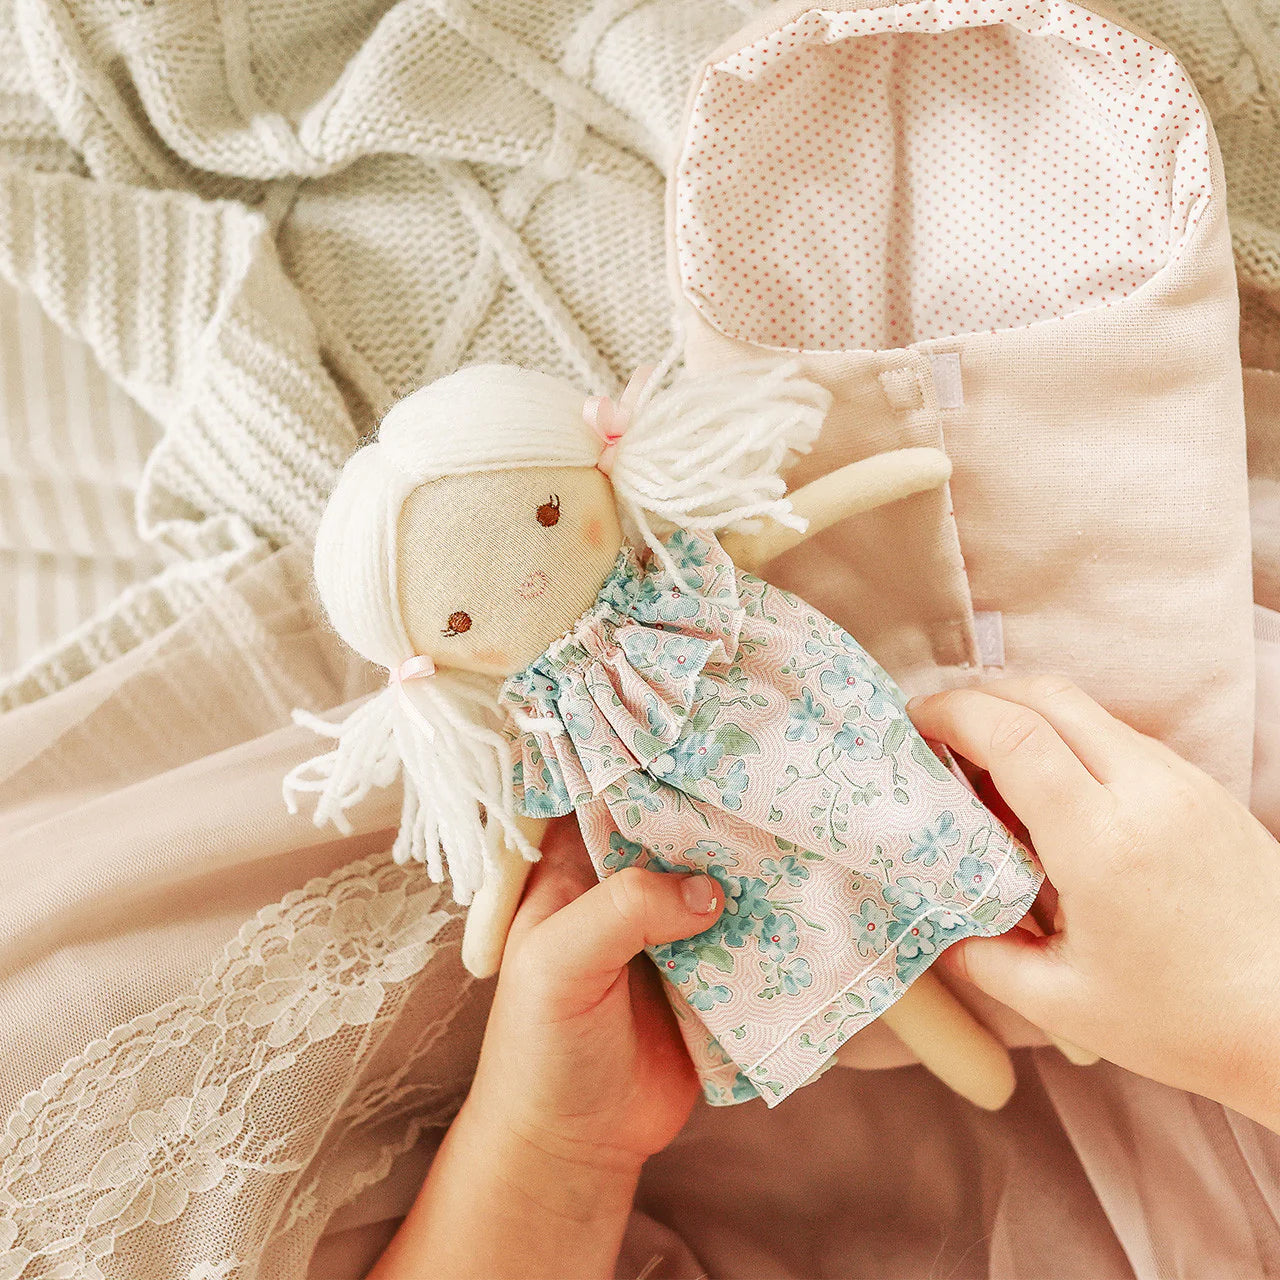 doll on toy shelf